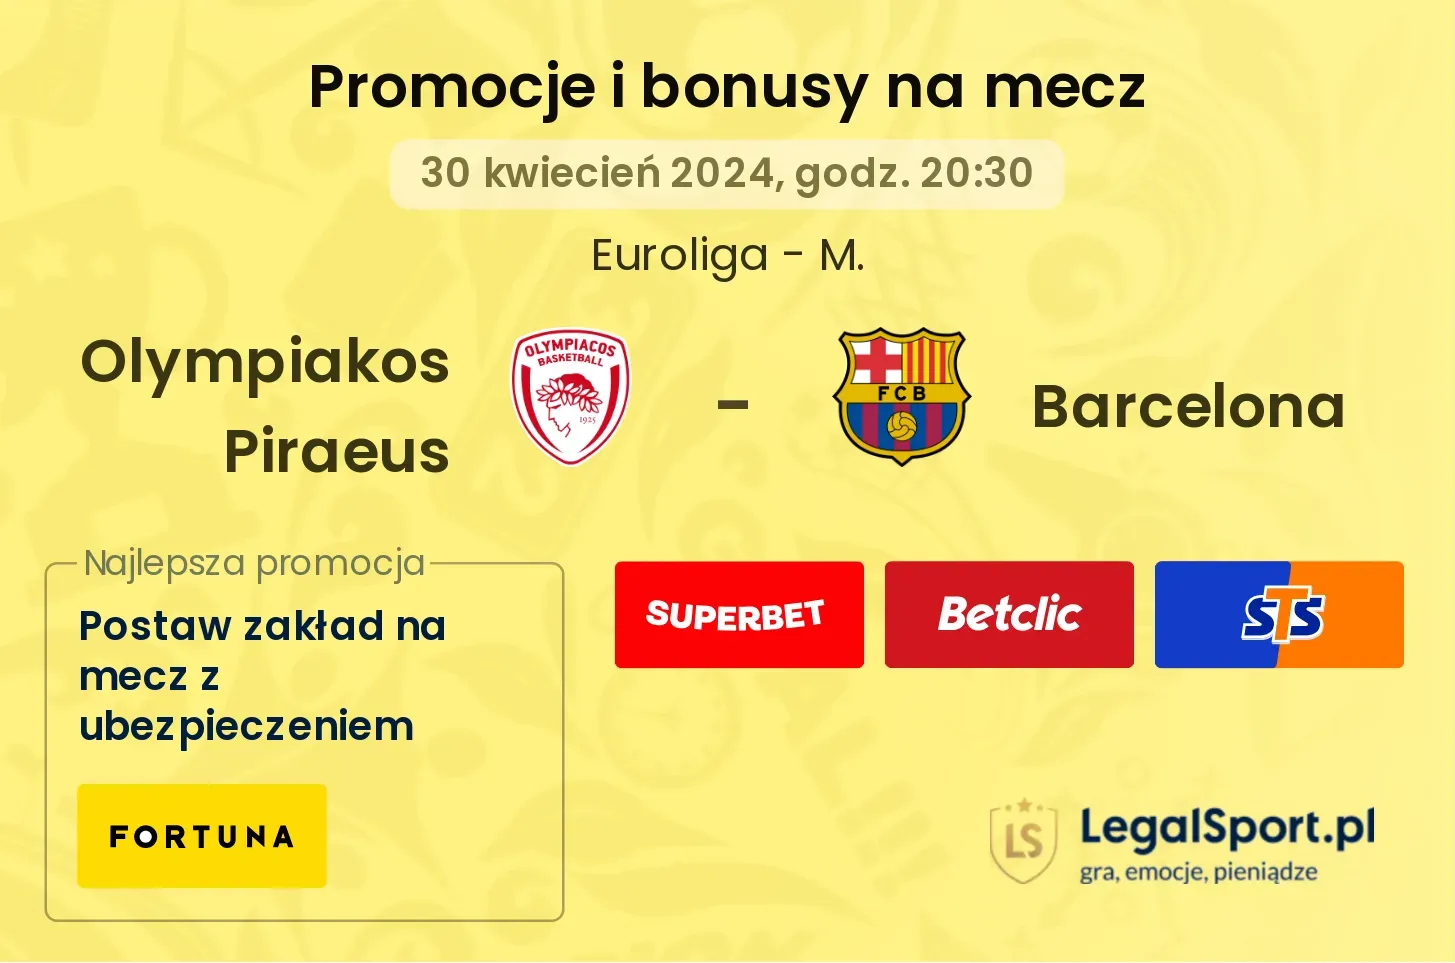 Olympiakos Piraeus - Barcelona promocje i bonusy (30.04, 20:30)